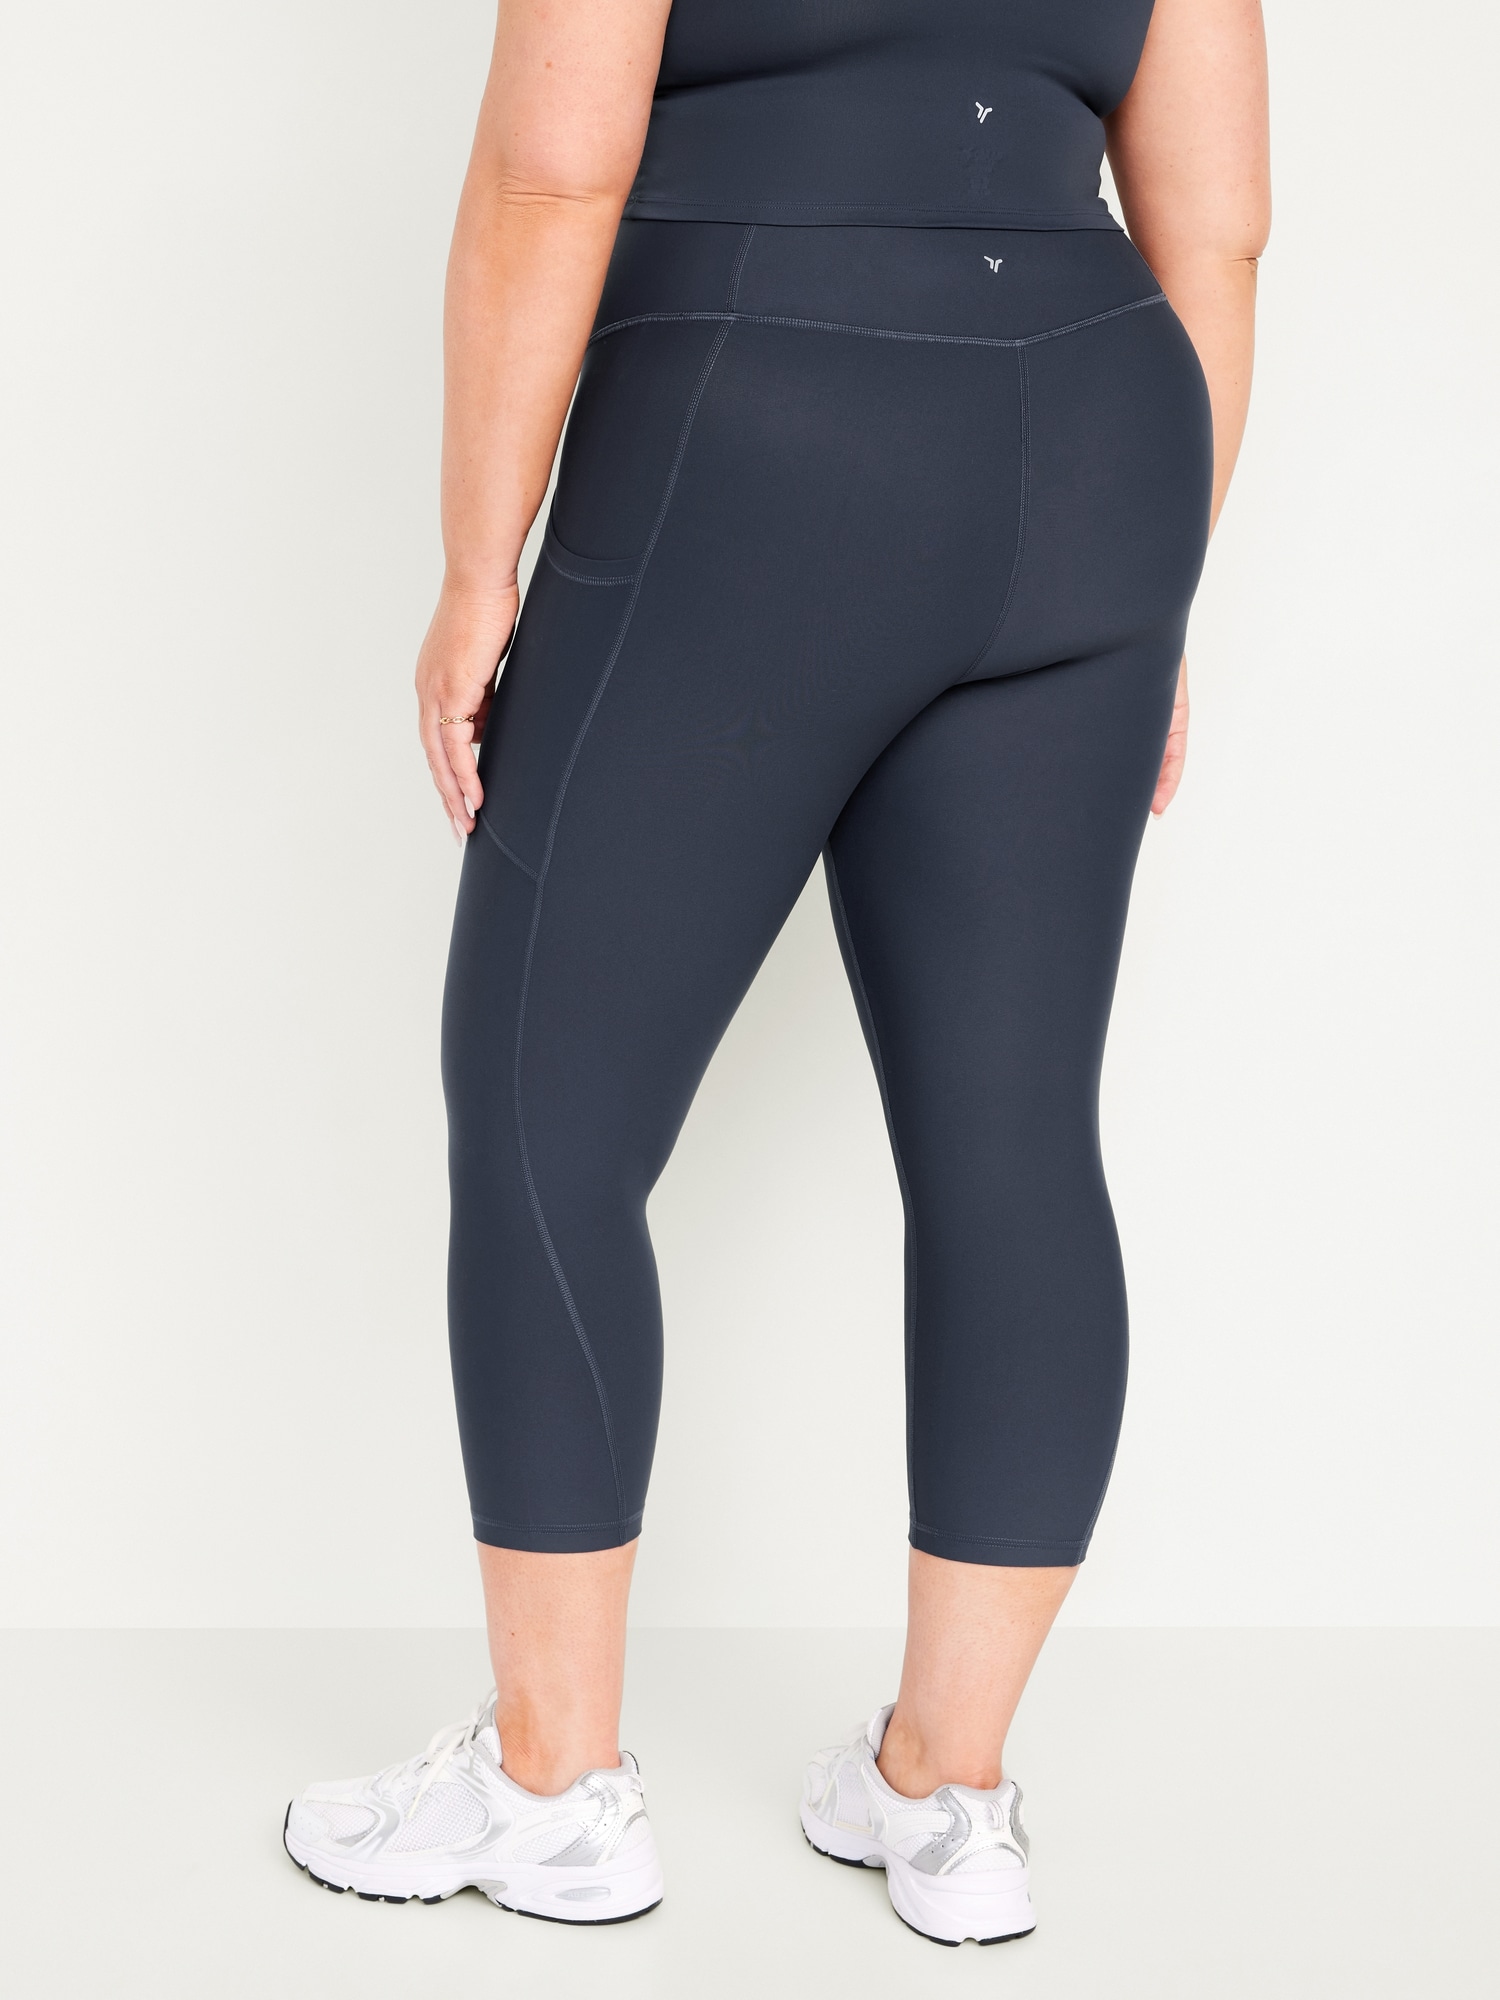 Lululemon Run Crop Capri Leggings Reflective Side Pockets Logo Pants Size 4